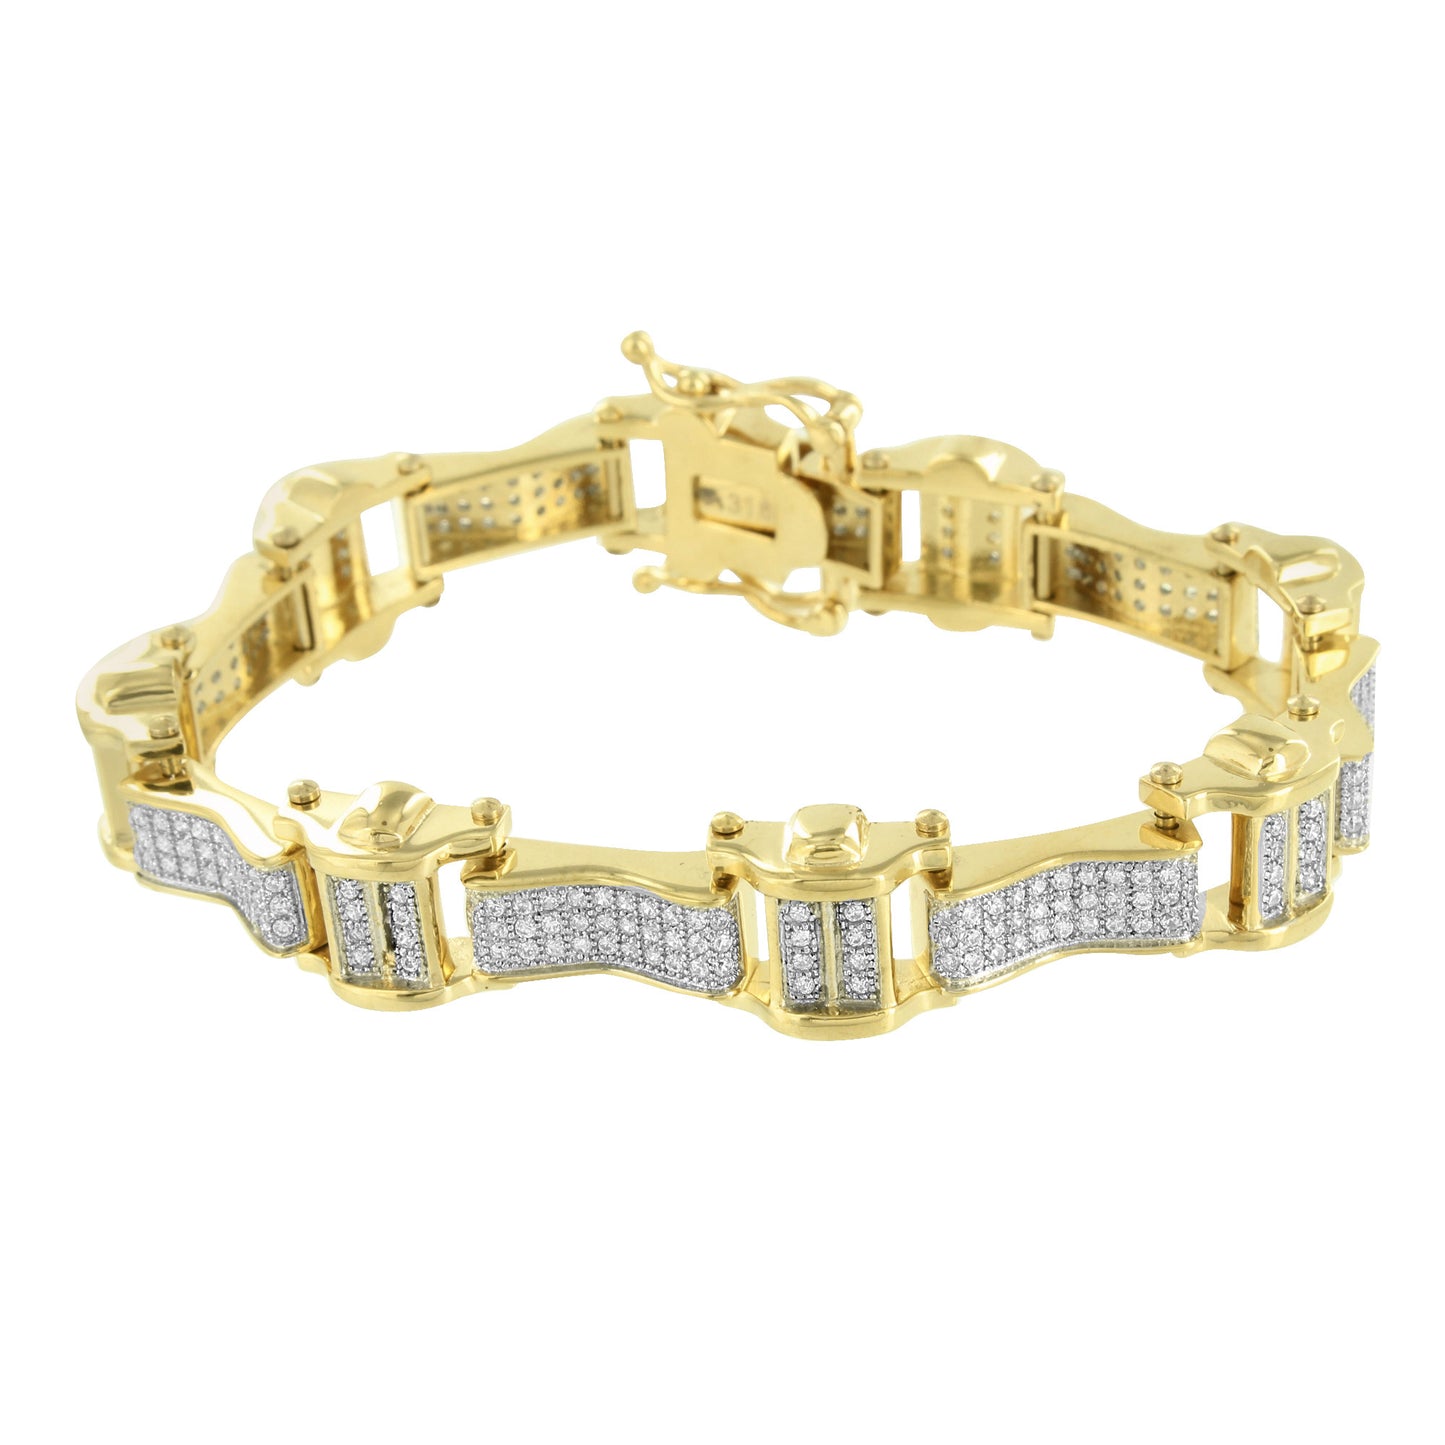 Stainless Steel Bracelet For Men On Sale Lab Diamonds 14k Yellow Gold Finish New